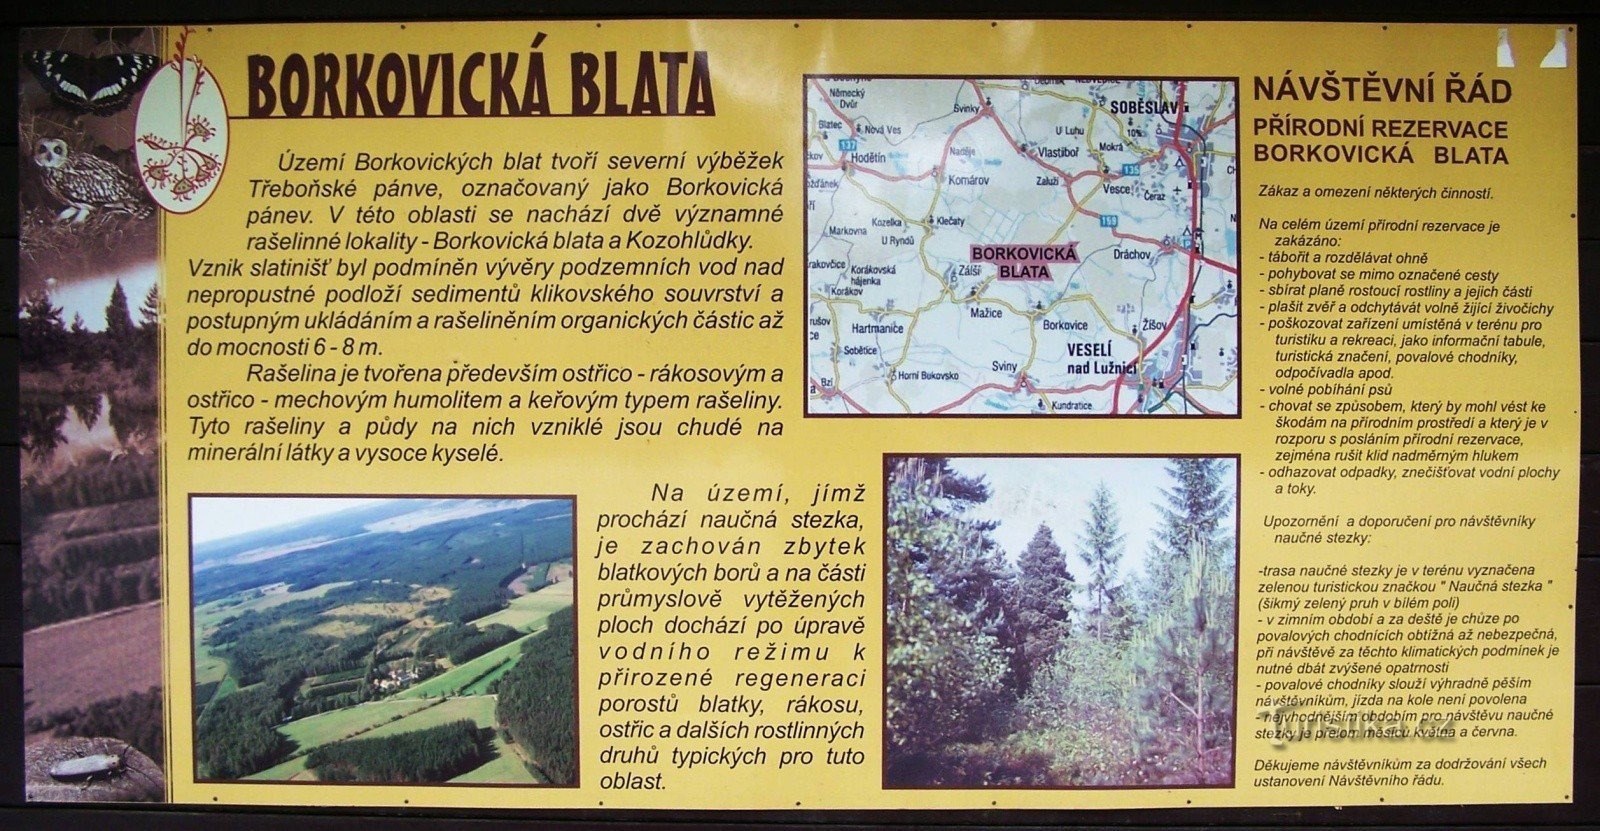 Borkovická blata educational trail